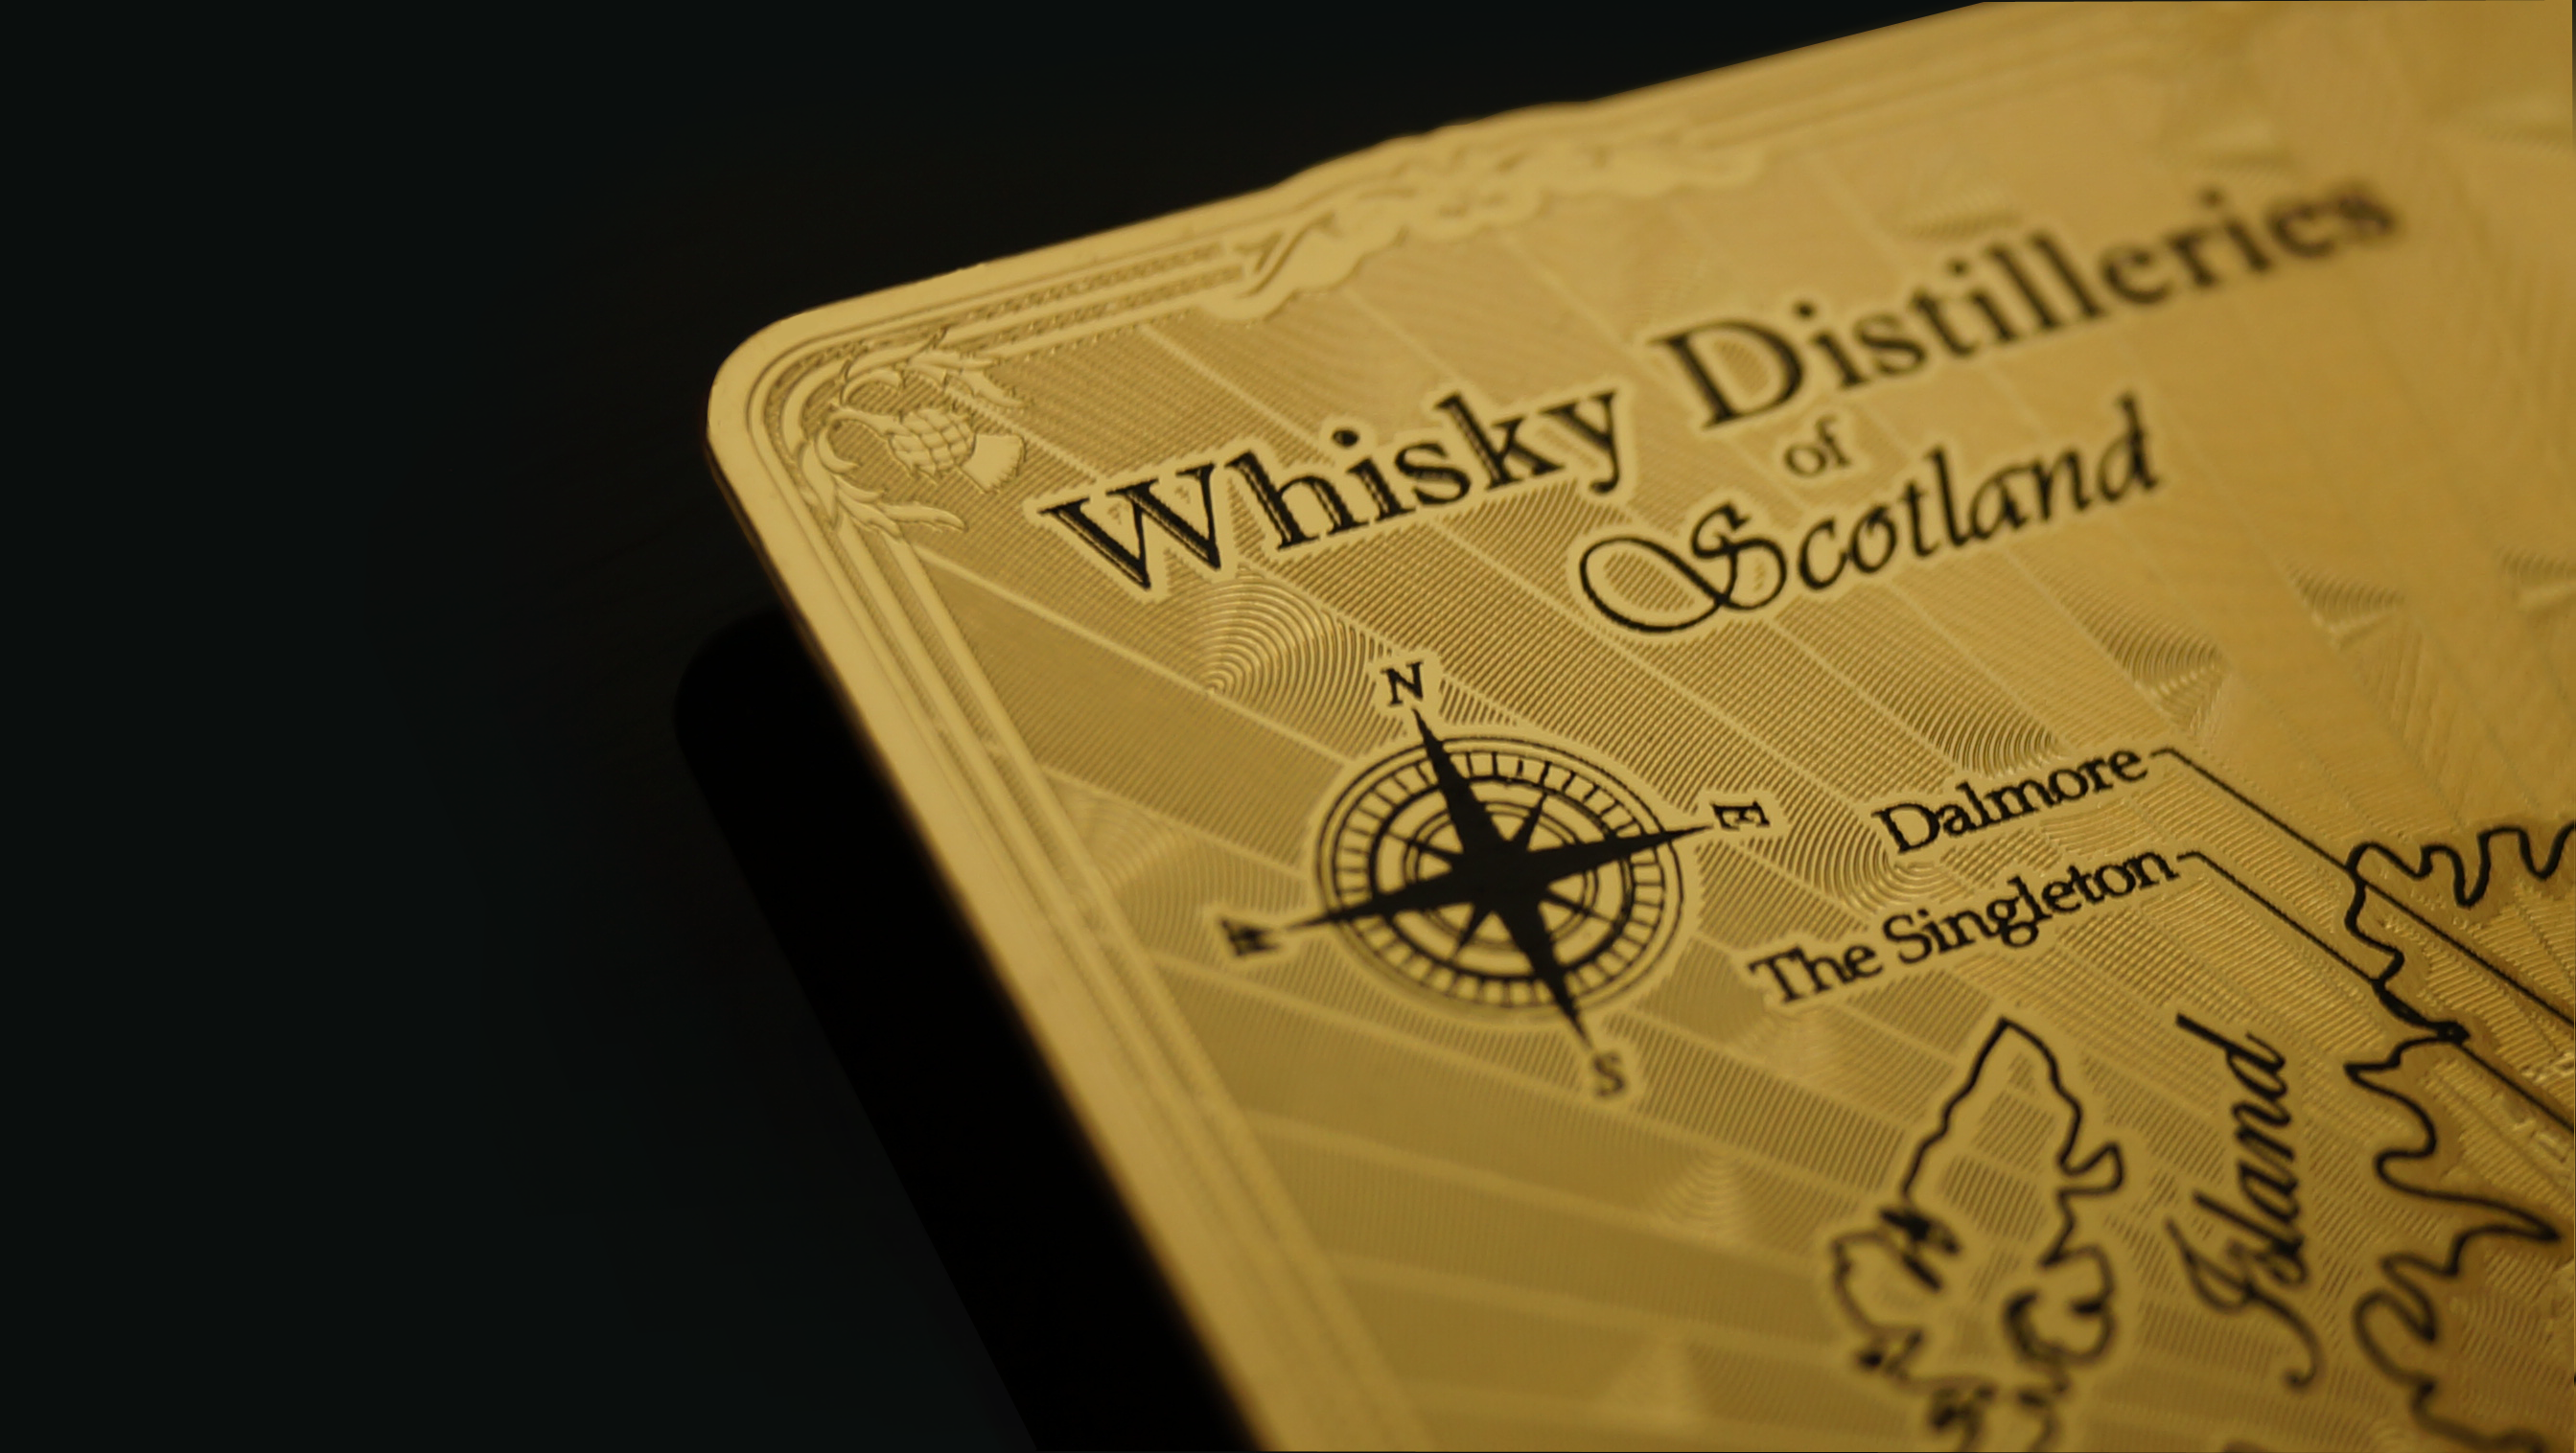 Gold Whisky Reference Card - VSB London